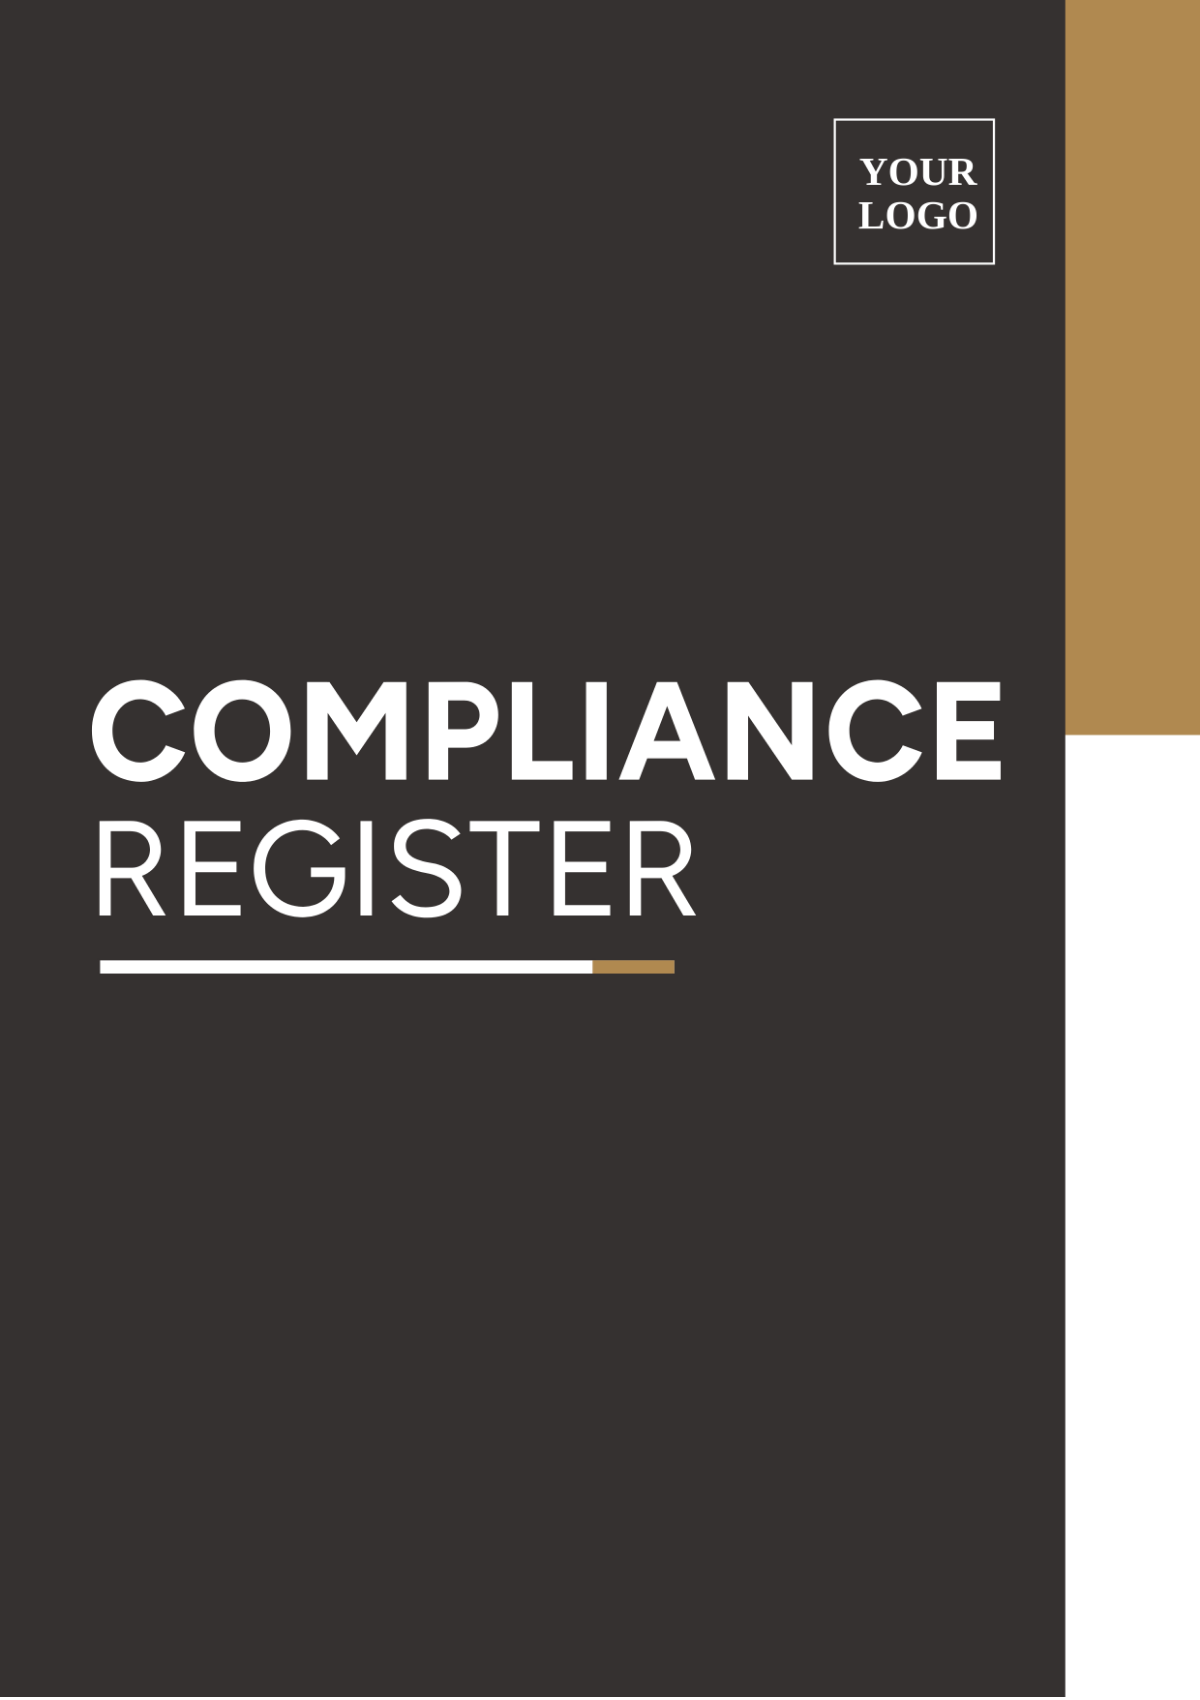 Compliance Register Template